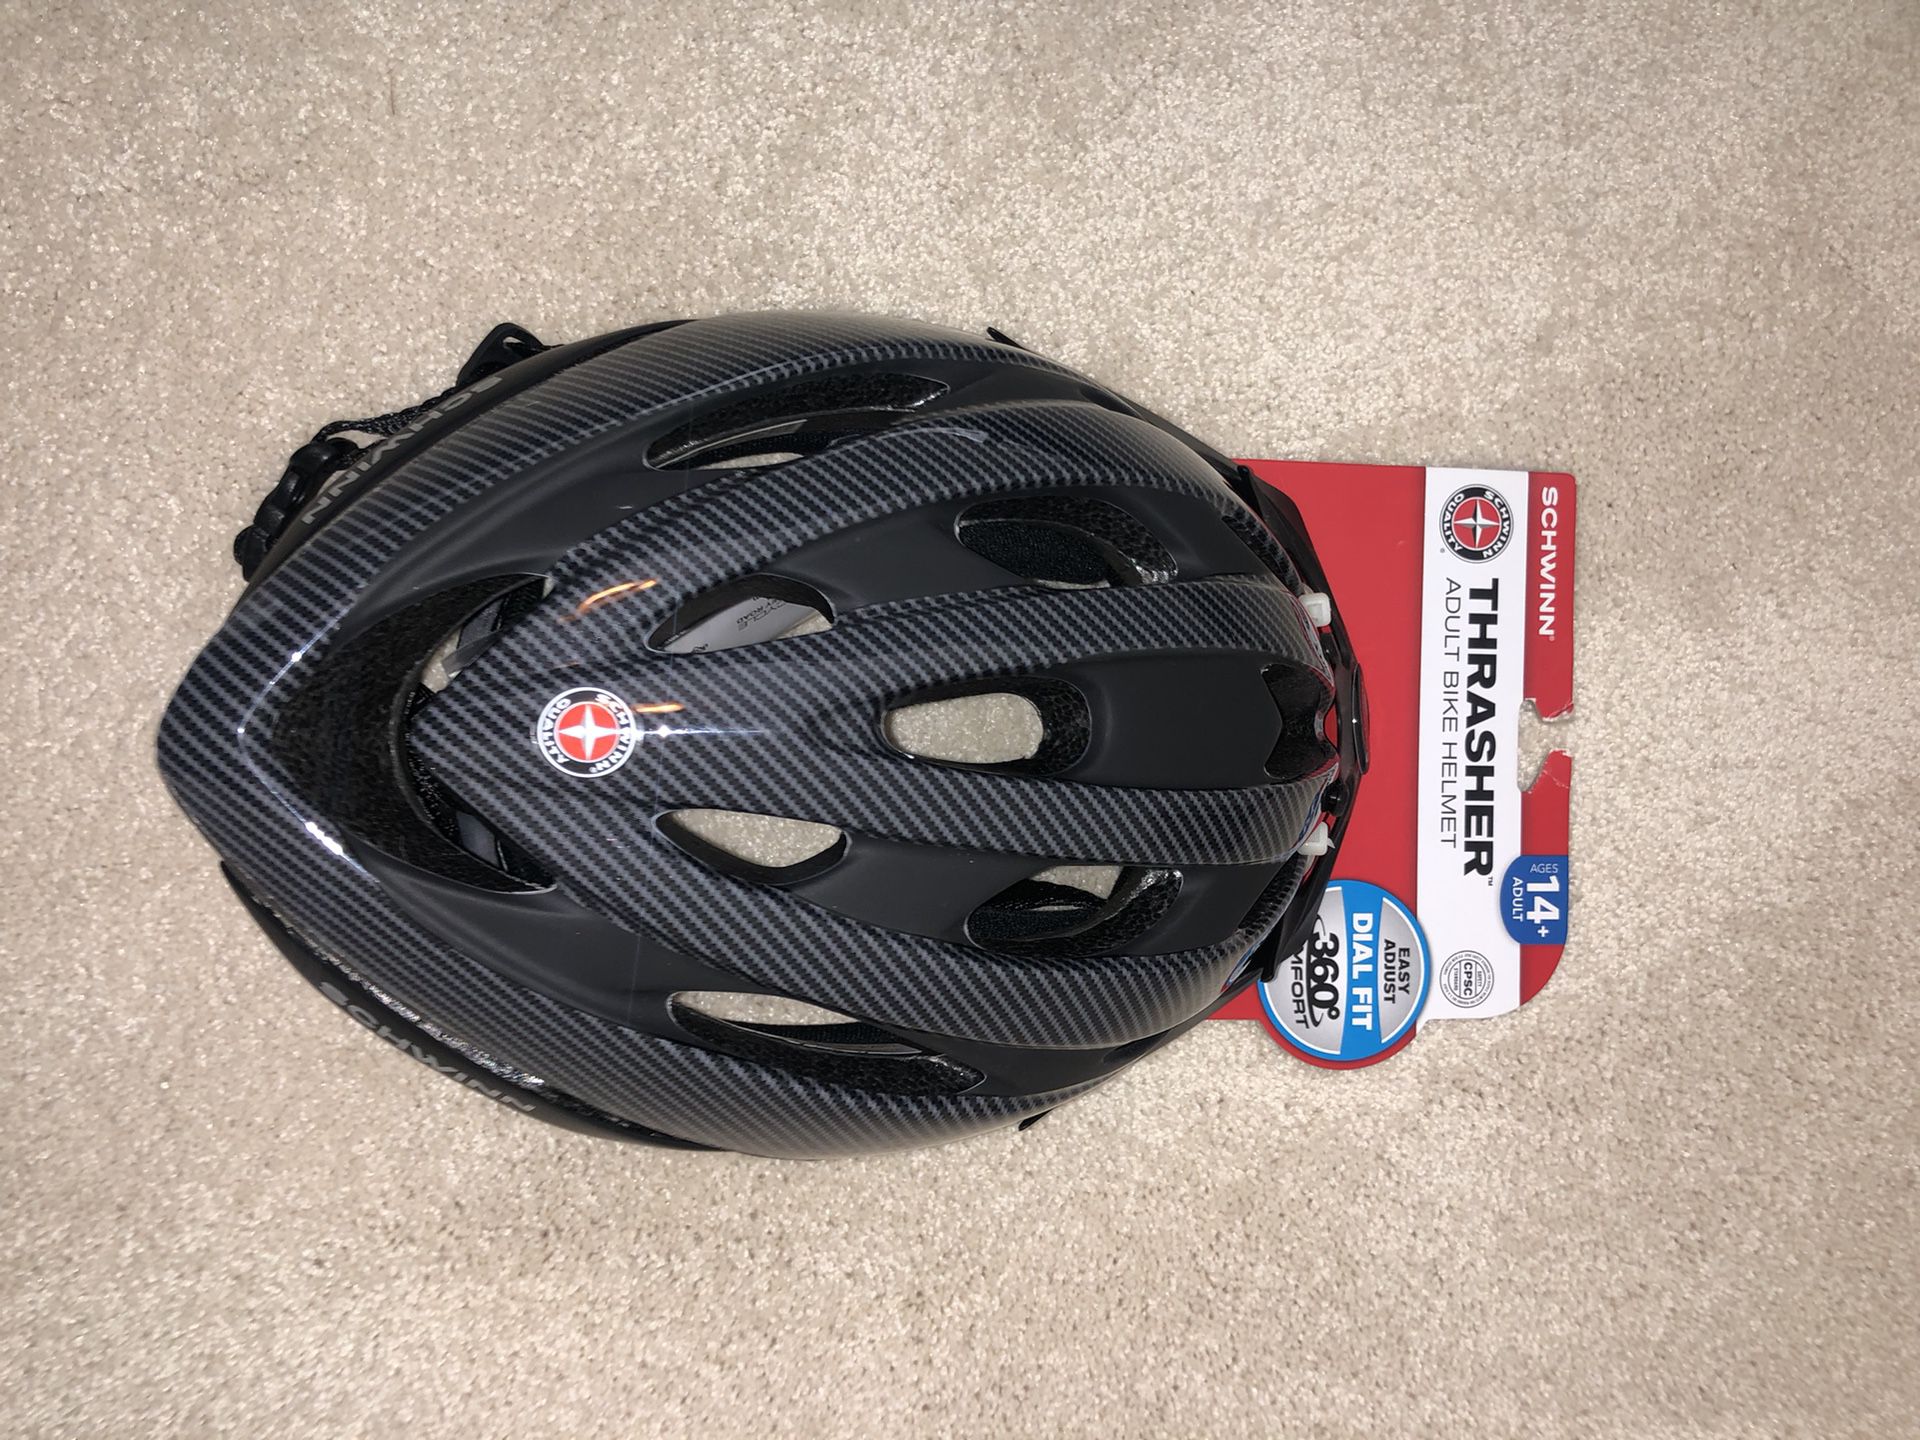 Schwinn Adult Bike Helmet 